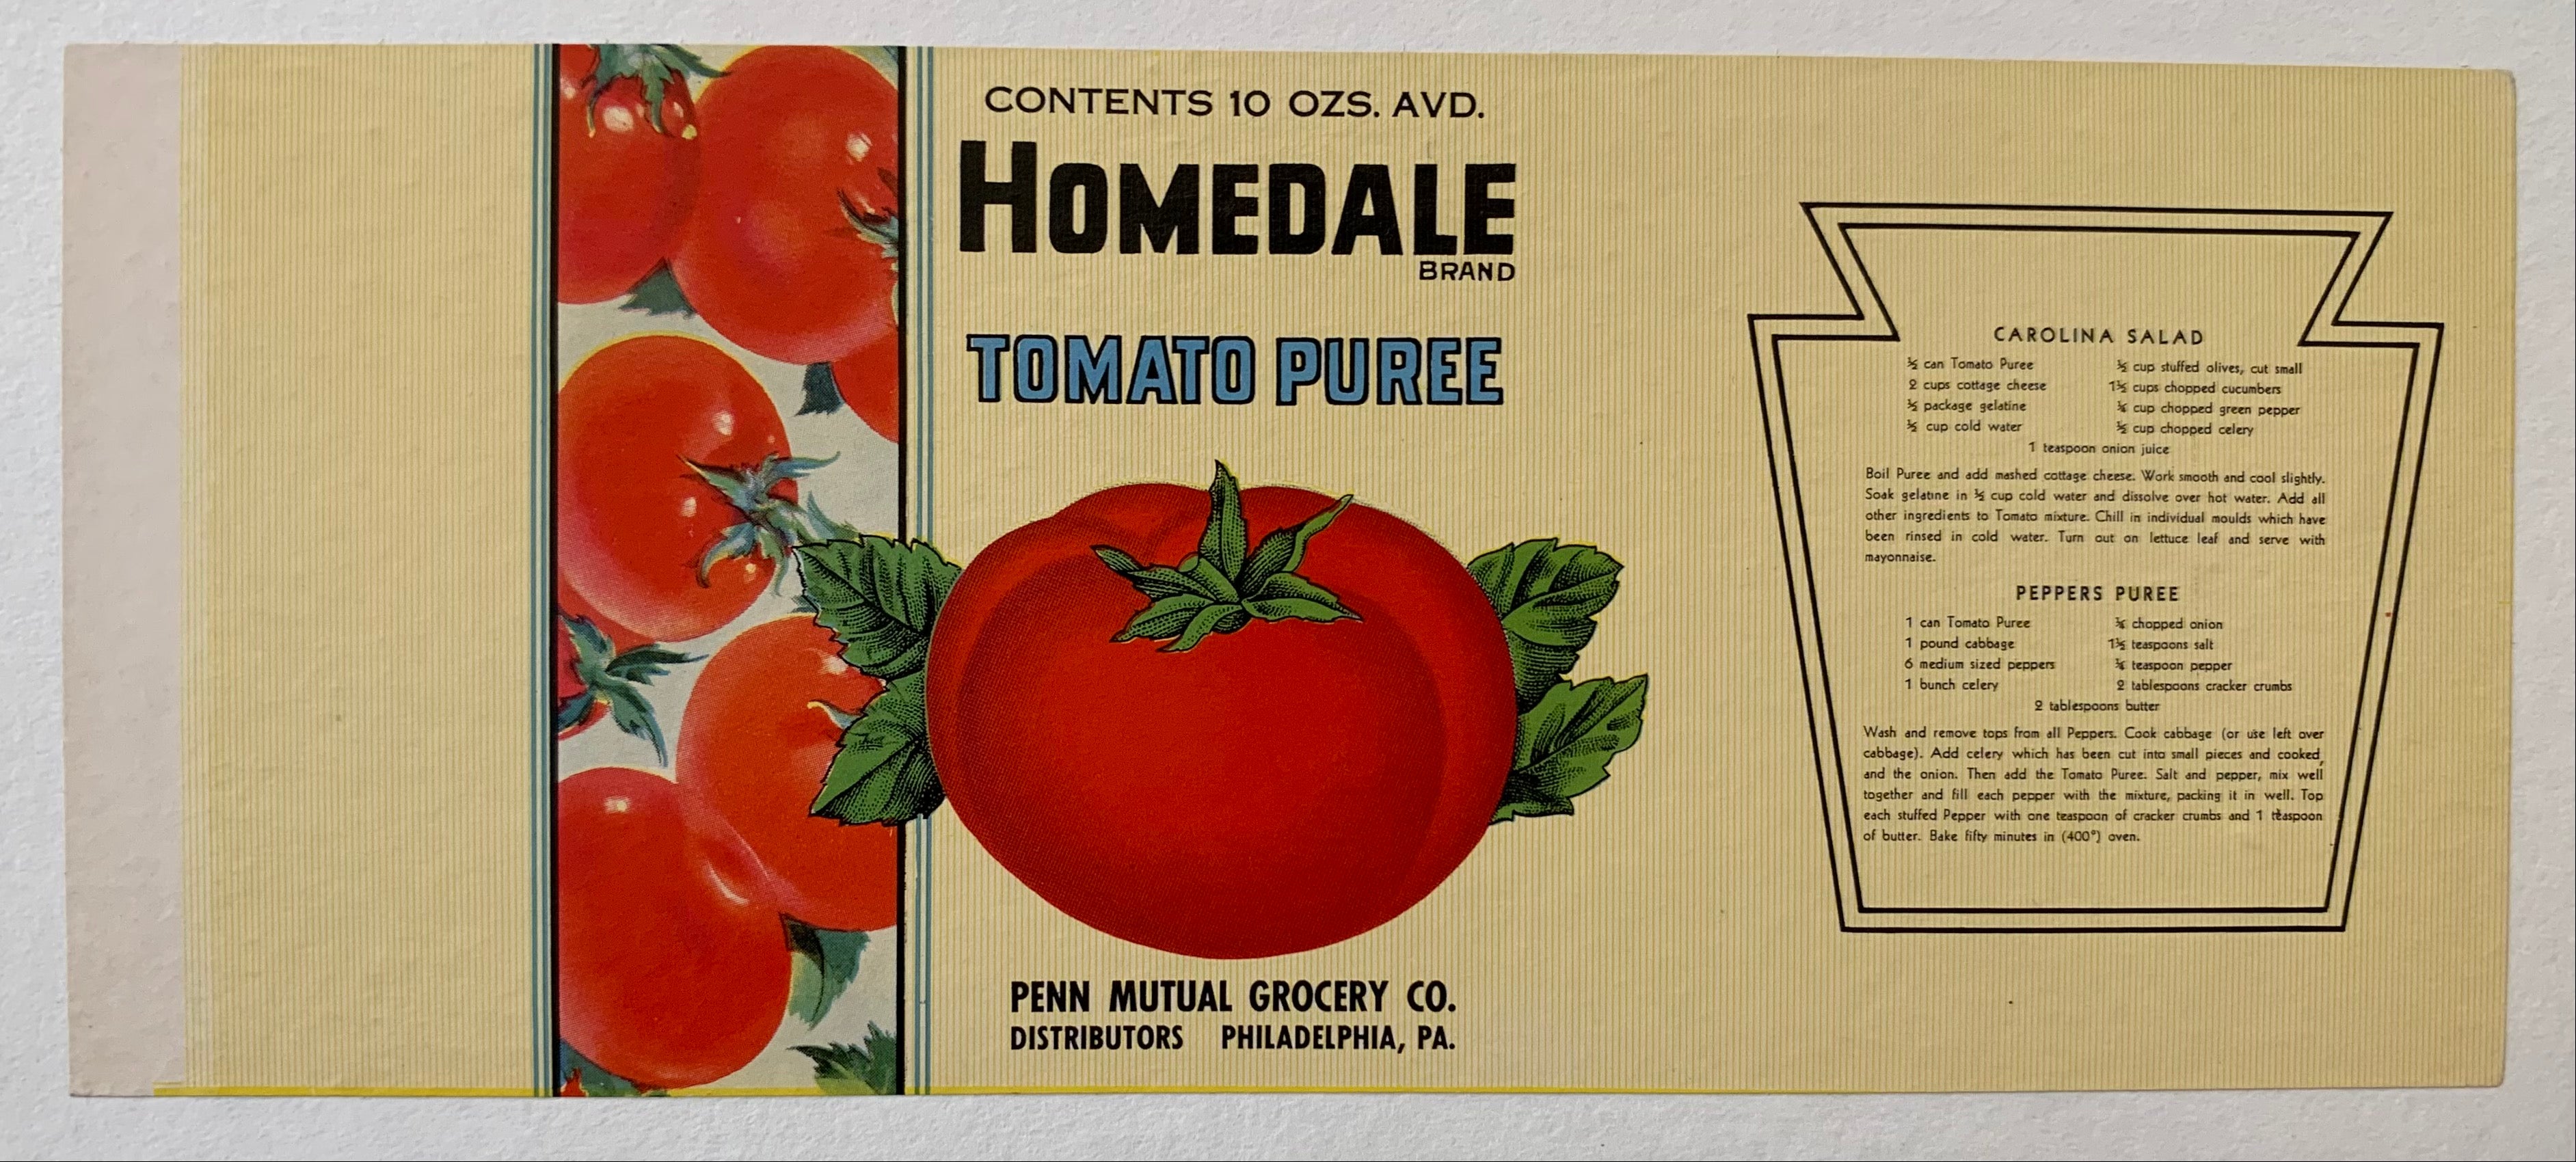 Homedale Tomato Puree Label